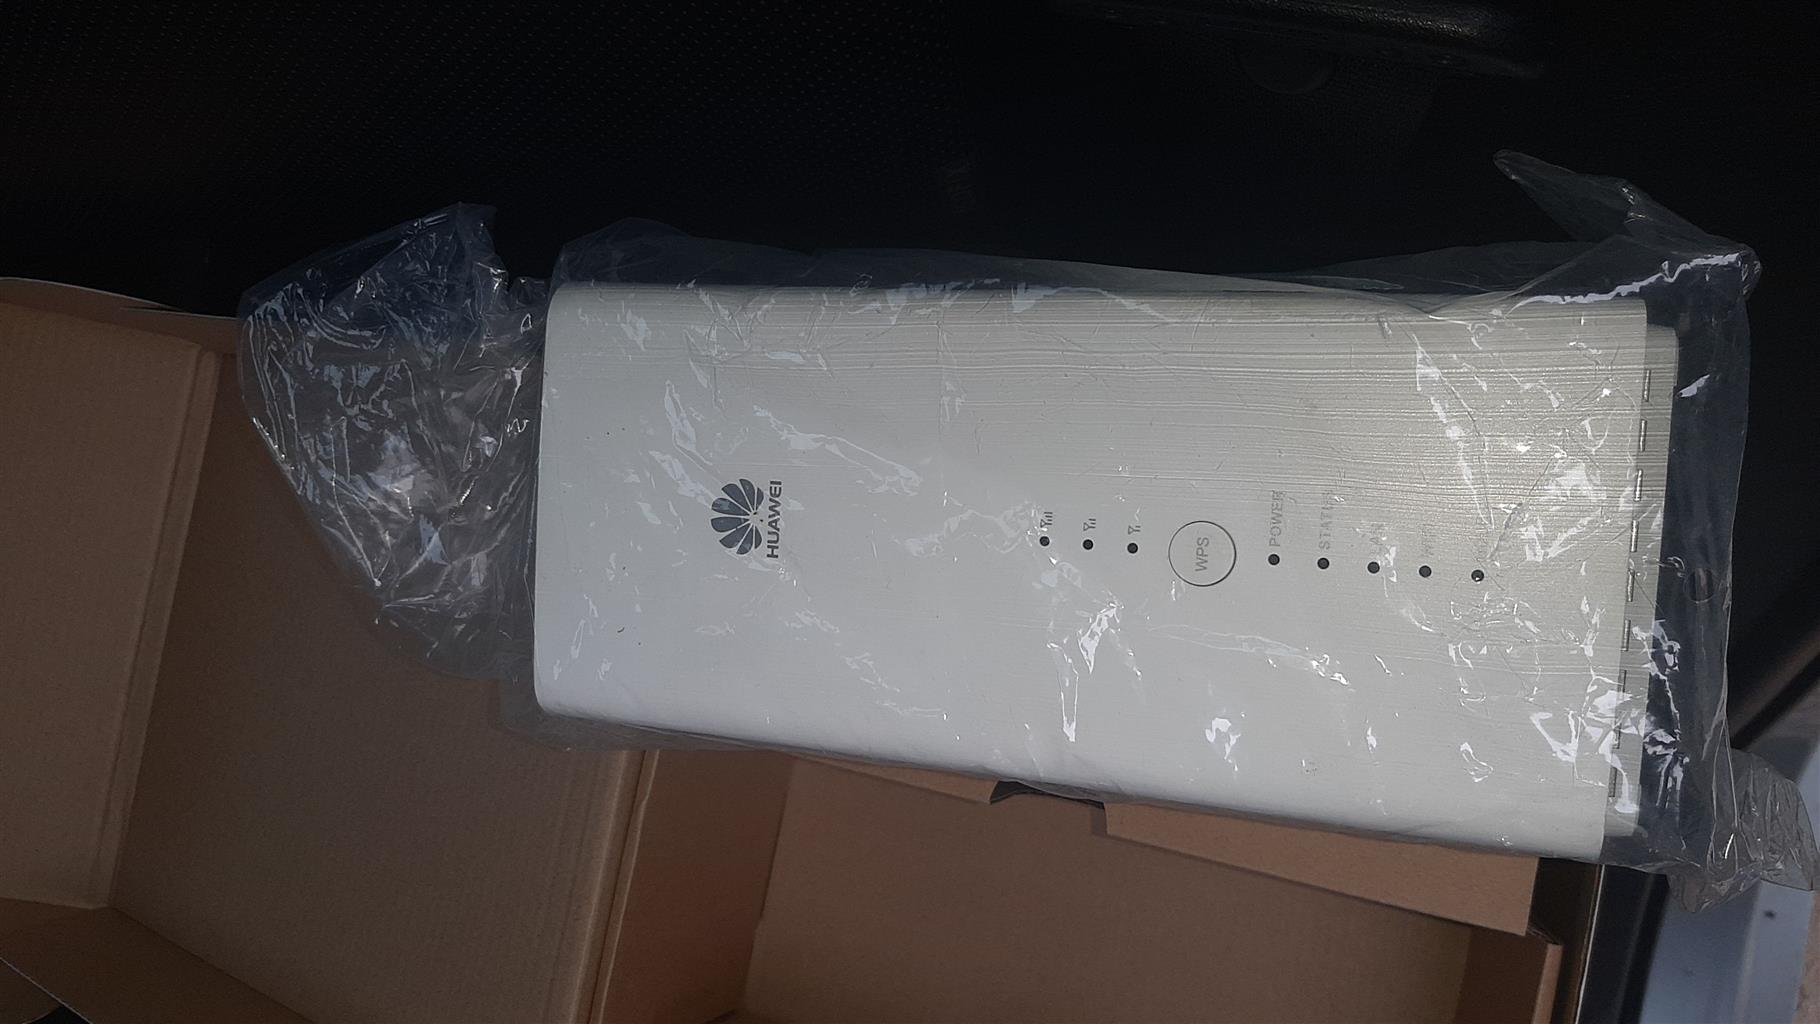 4g/5g huawei b618 -22d home router